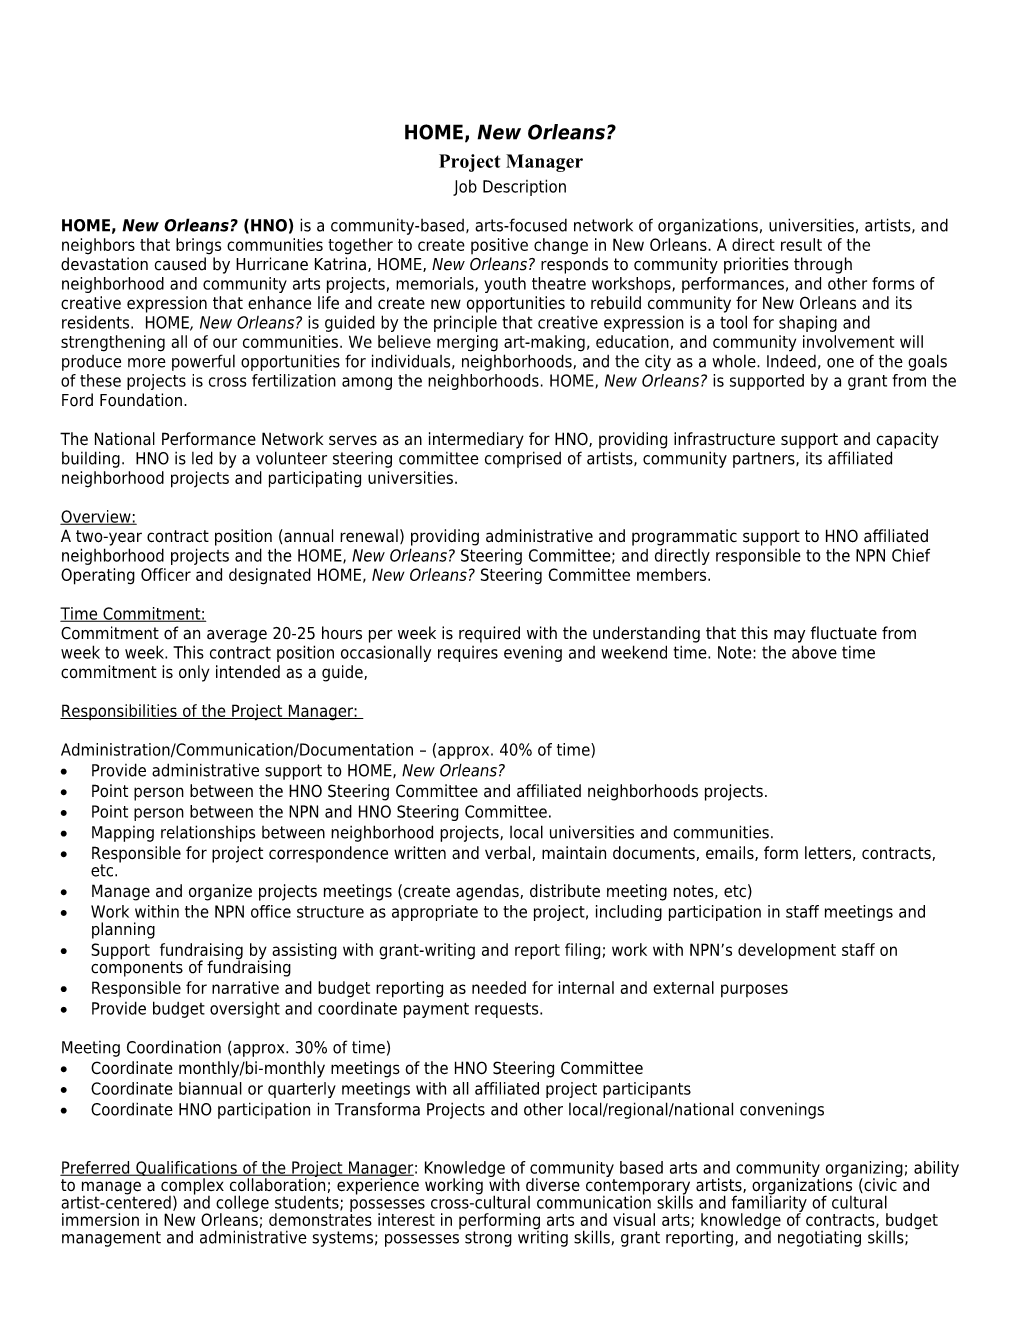 HNO Project Manager Job Description